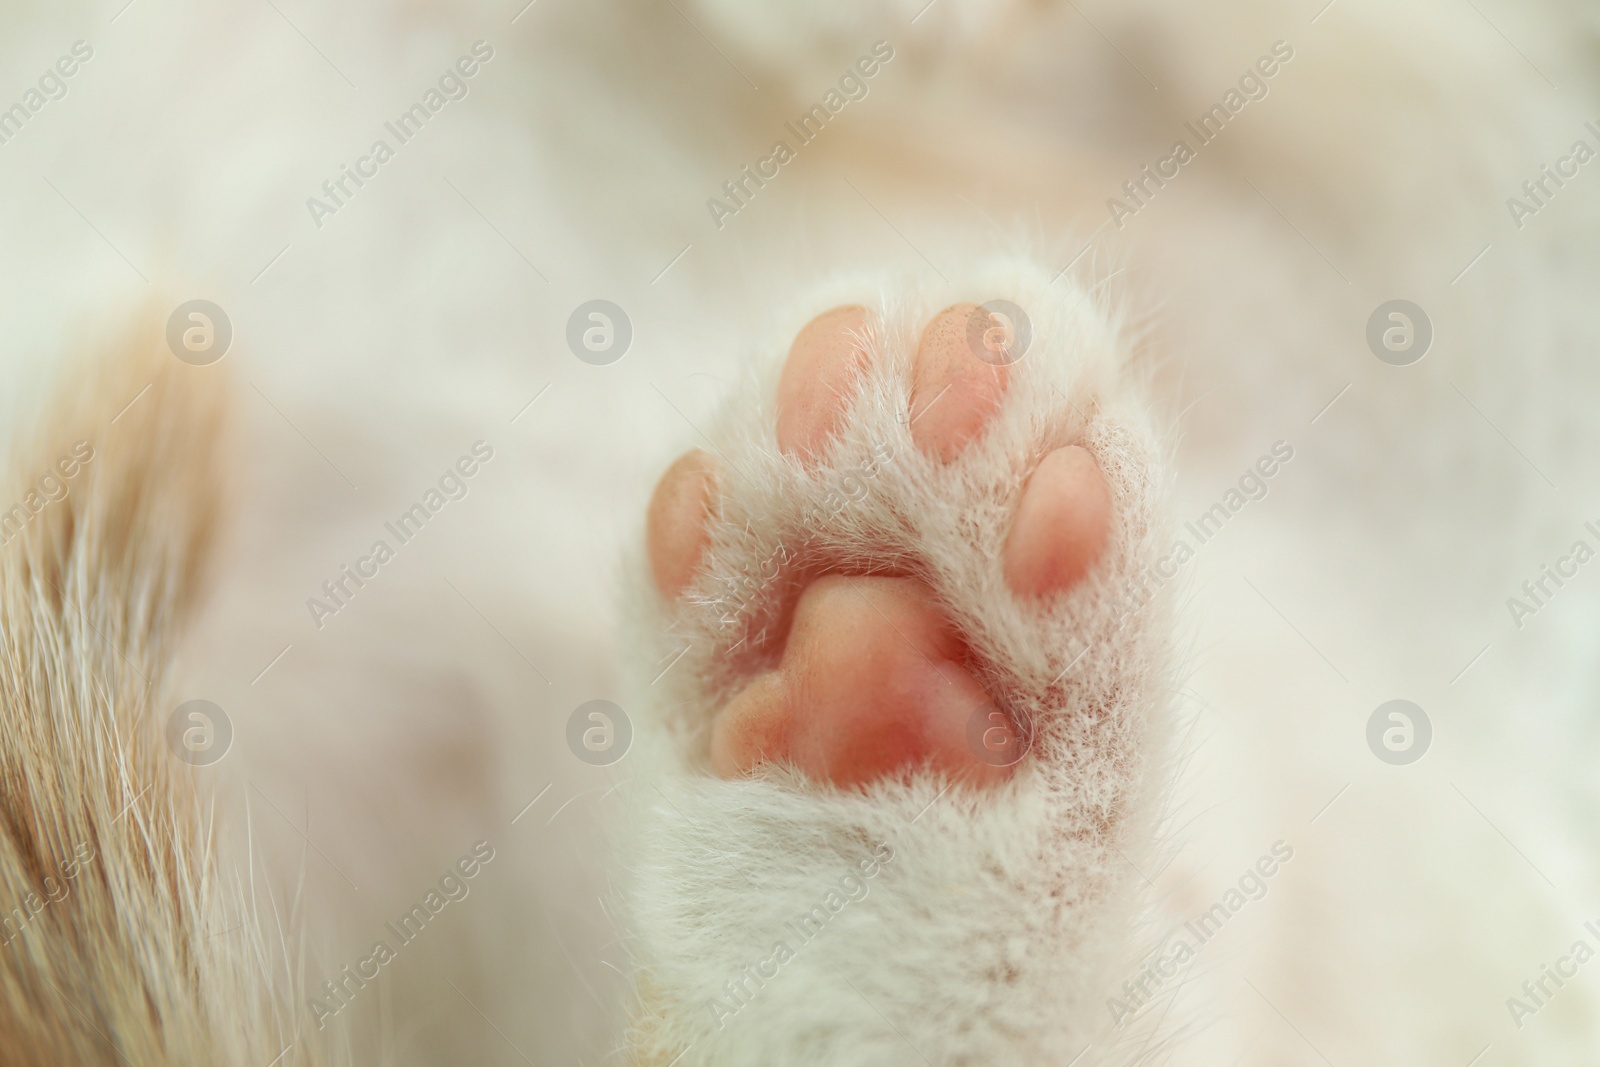 Photo of Cute little kitten, closeup view of paw